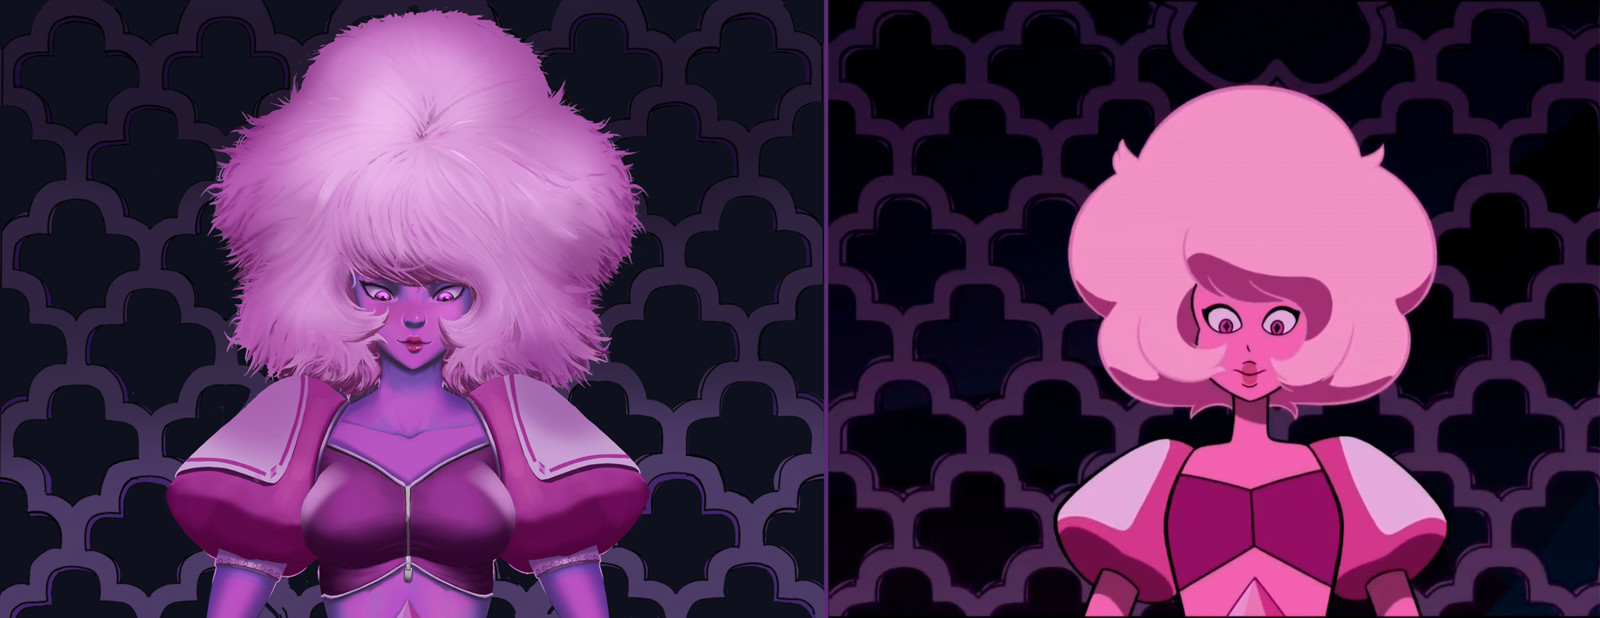 Pink Diamond - Steven Universe.